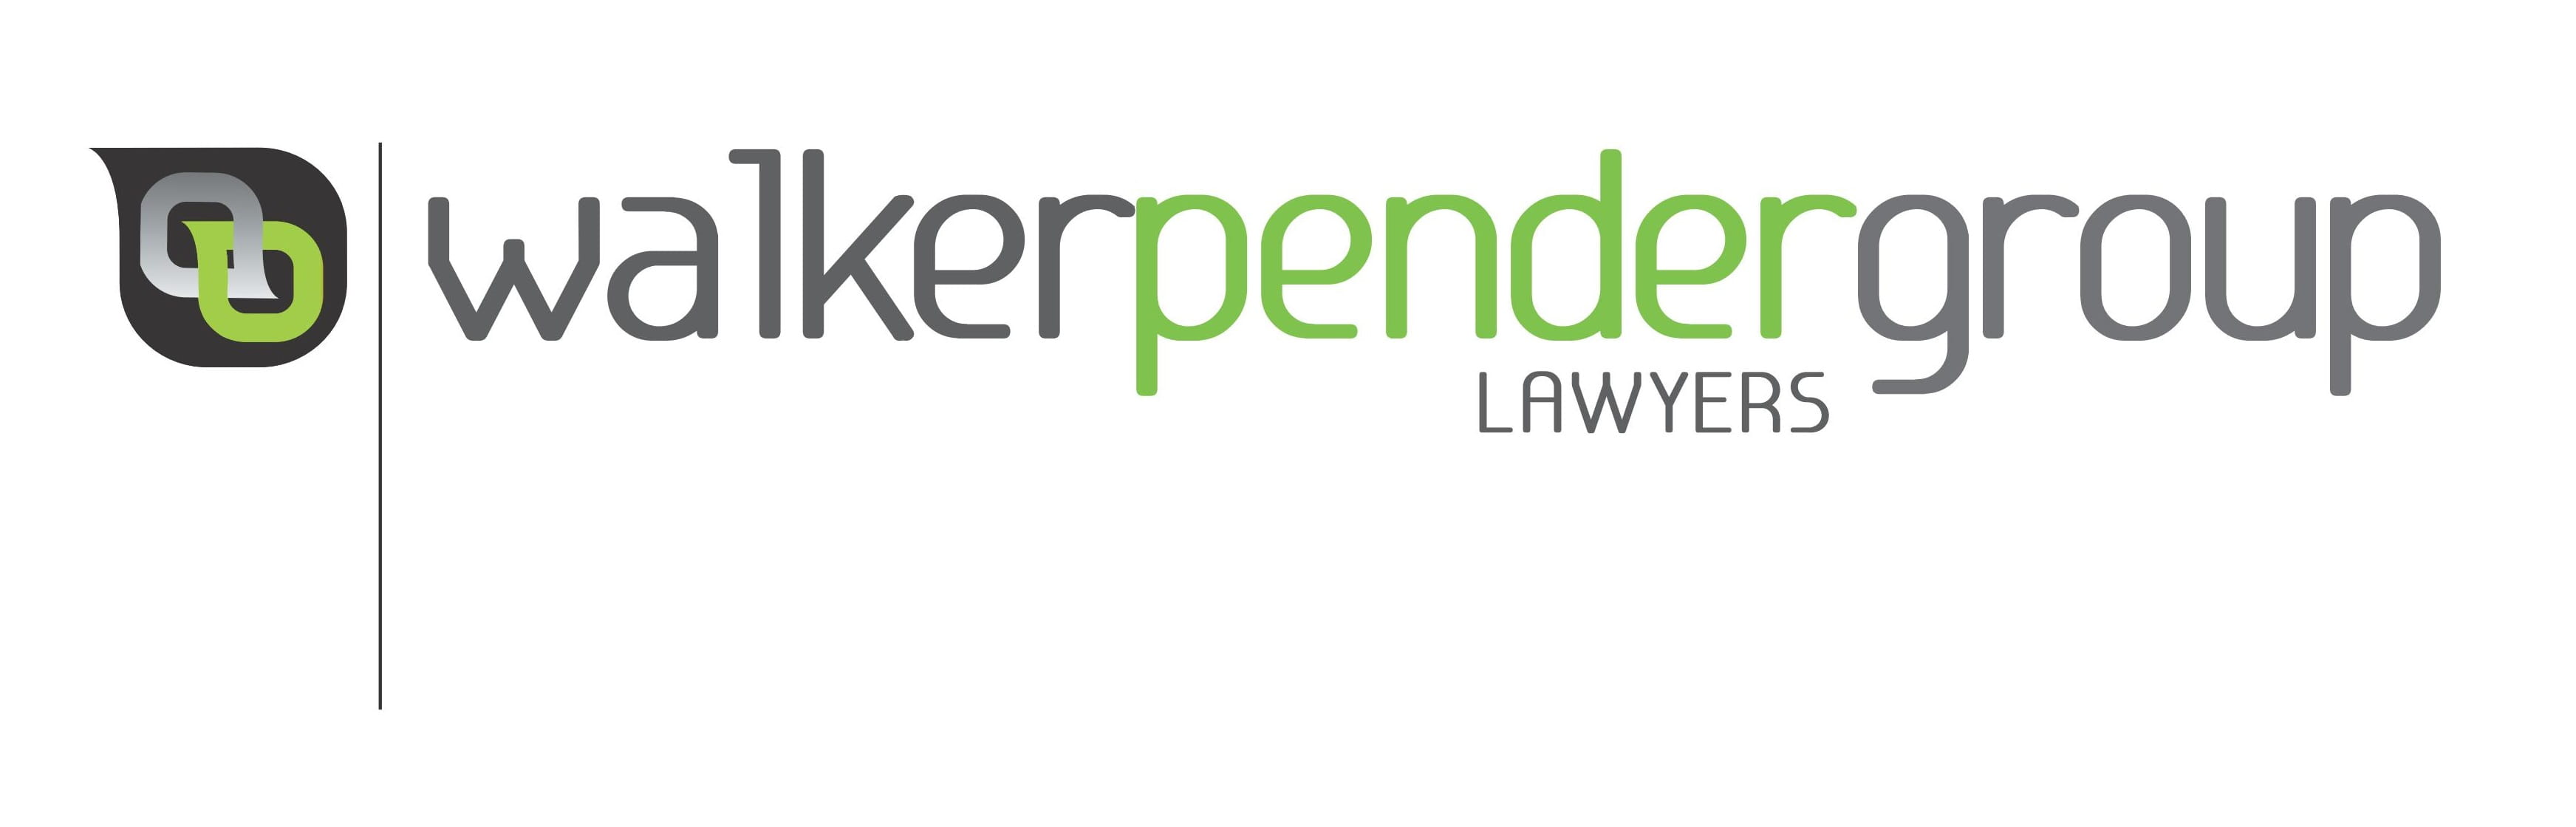 Walker Pender Group Lawyers